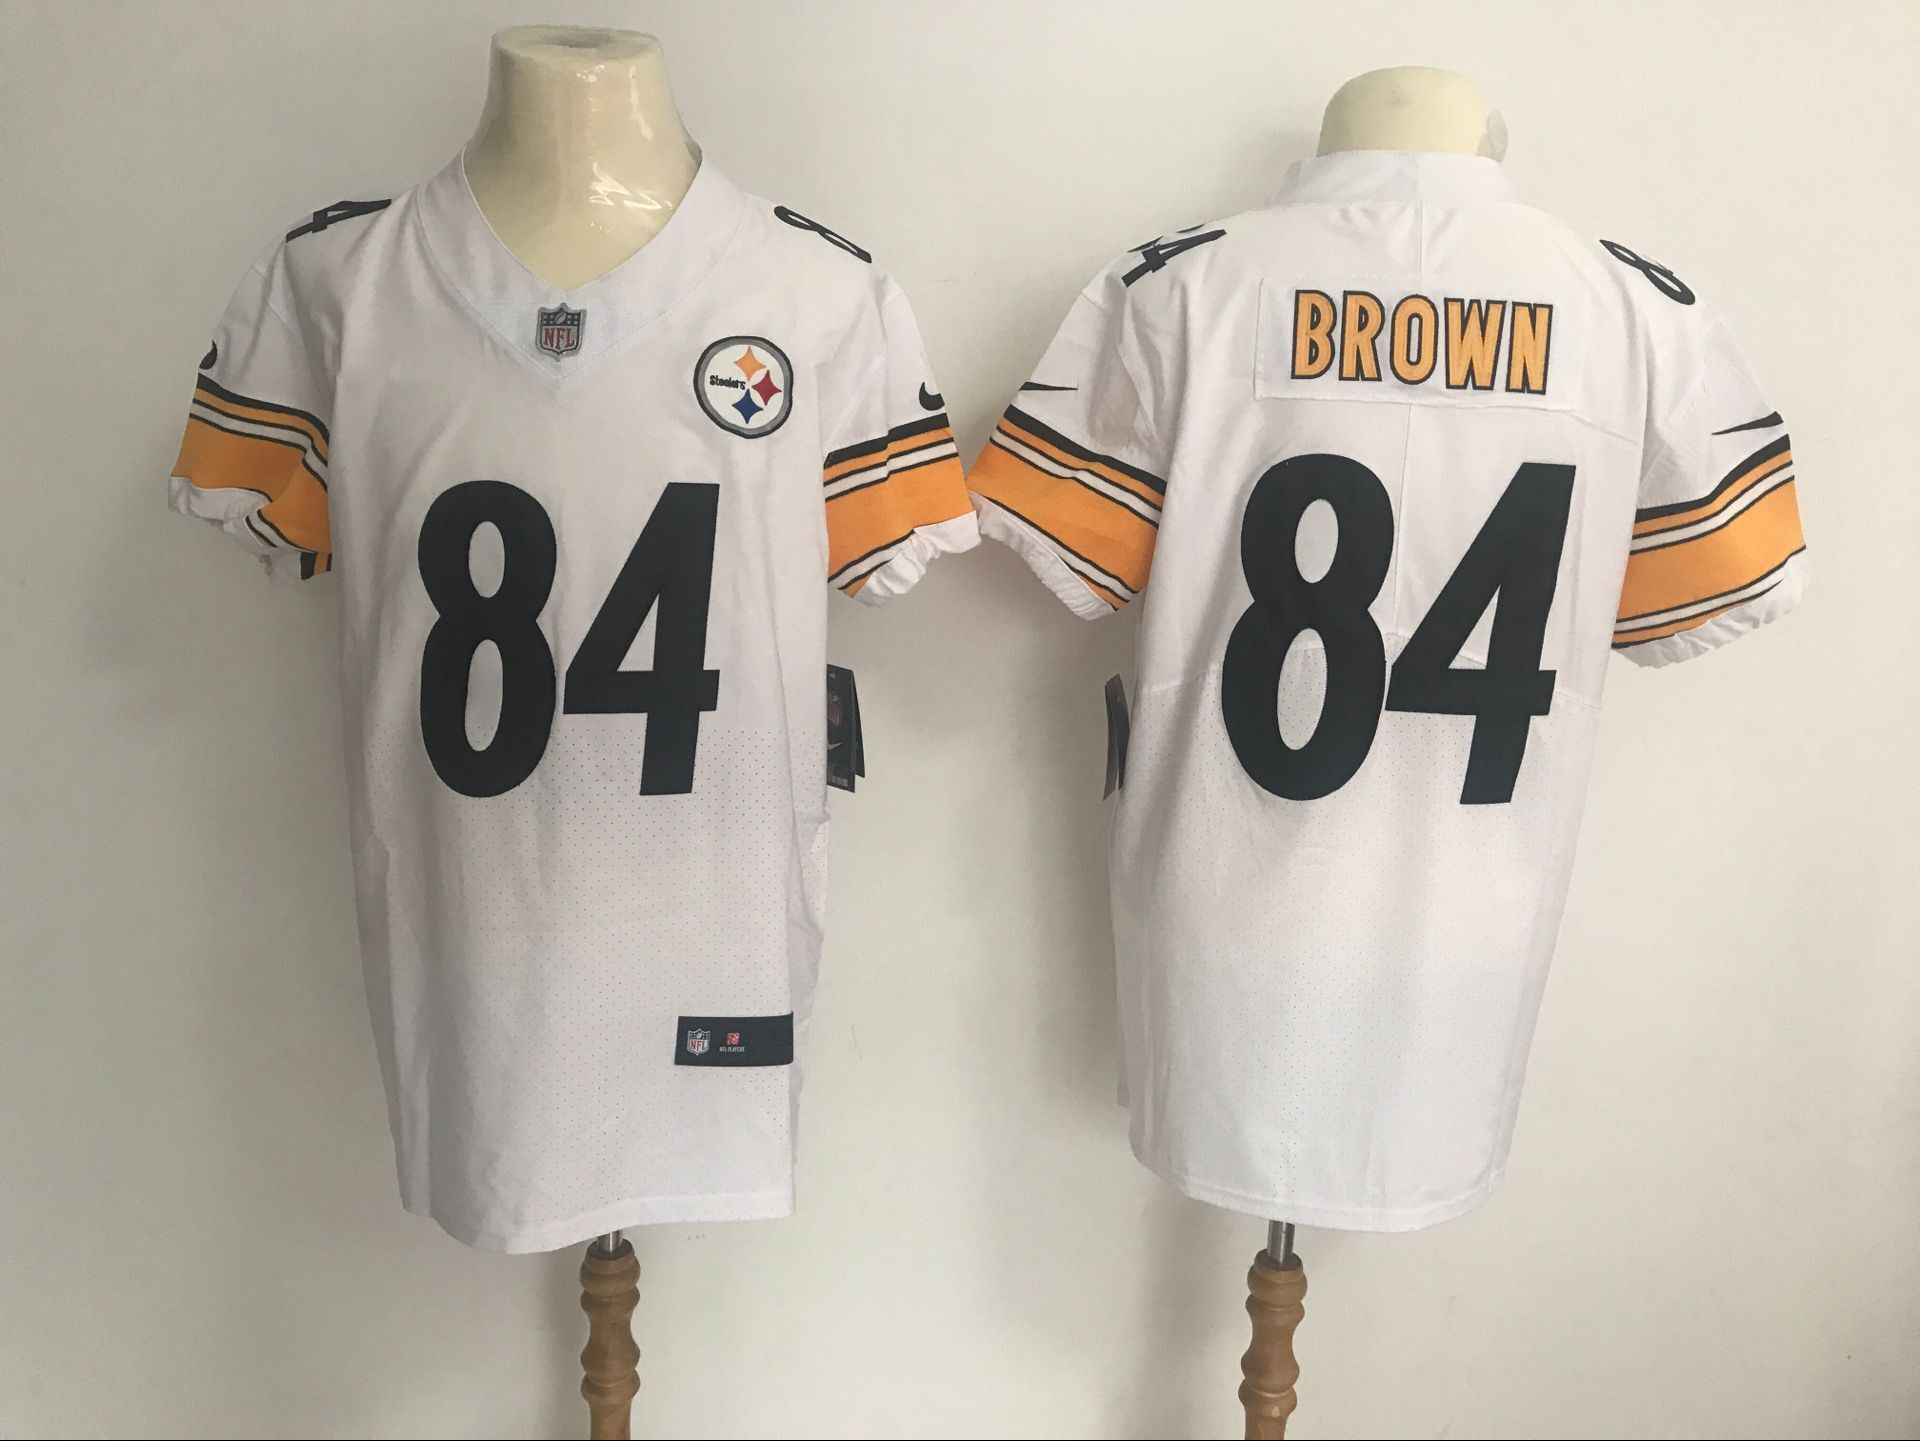 Men's Pittsburgh Steelers #84 Antonio Brown White Vapor Untouchable Elite Stitched NFL Jersey